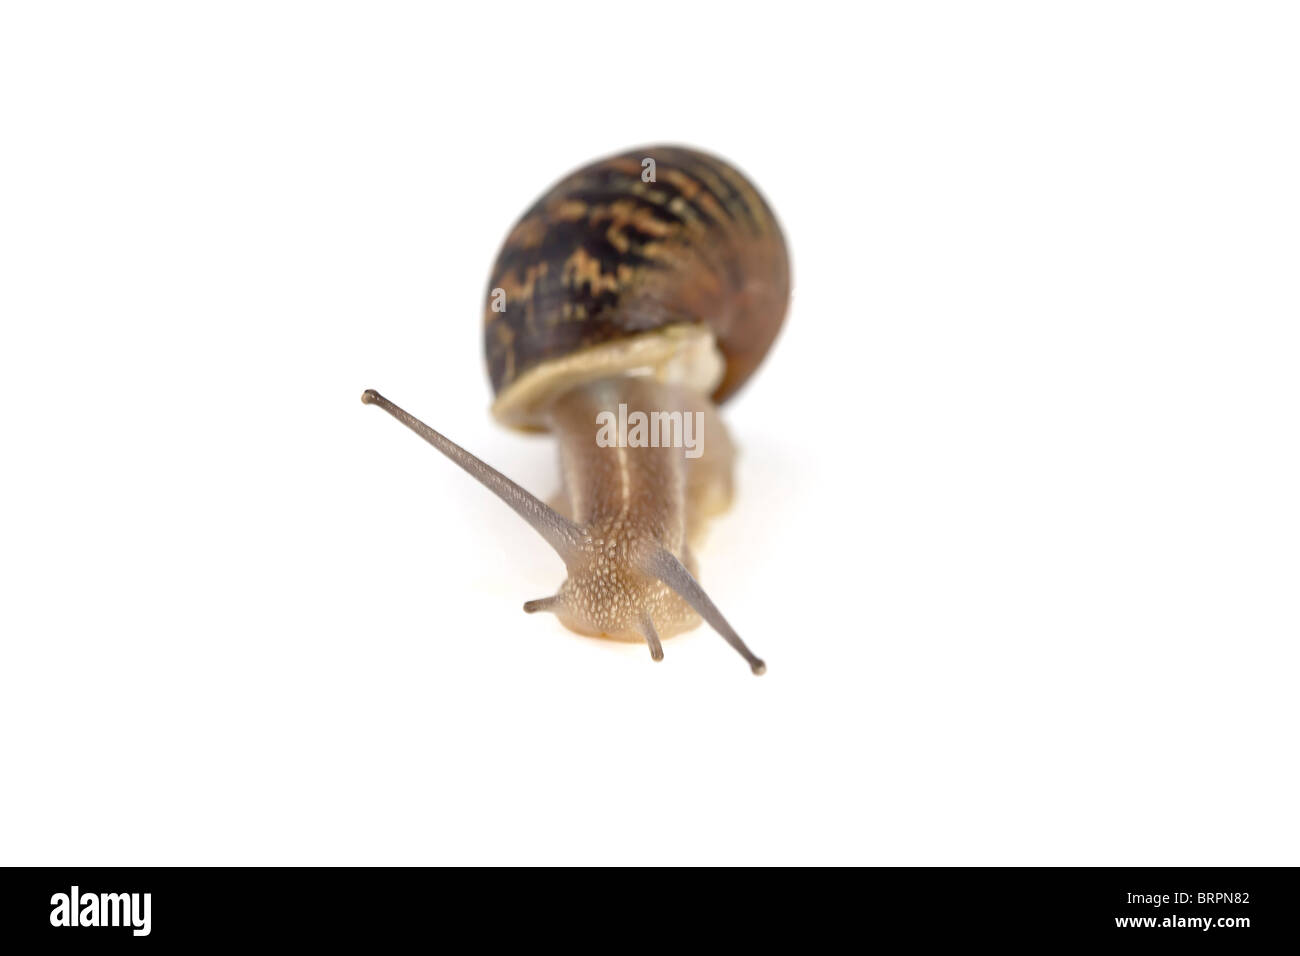 Snail on a white background Stock Photo